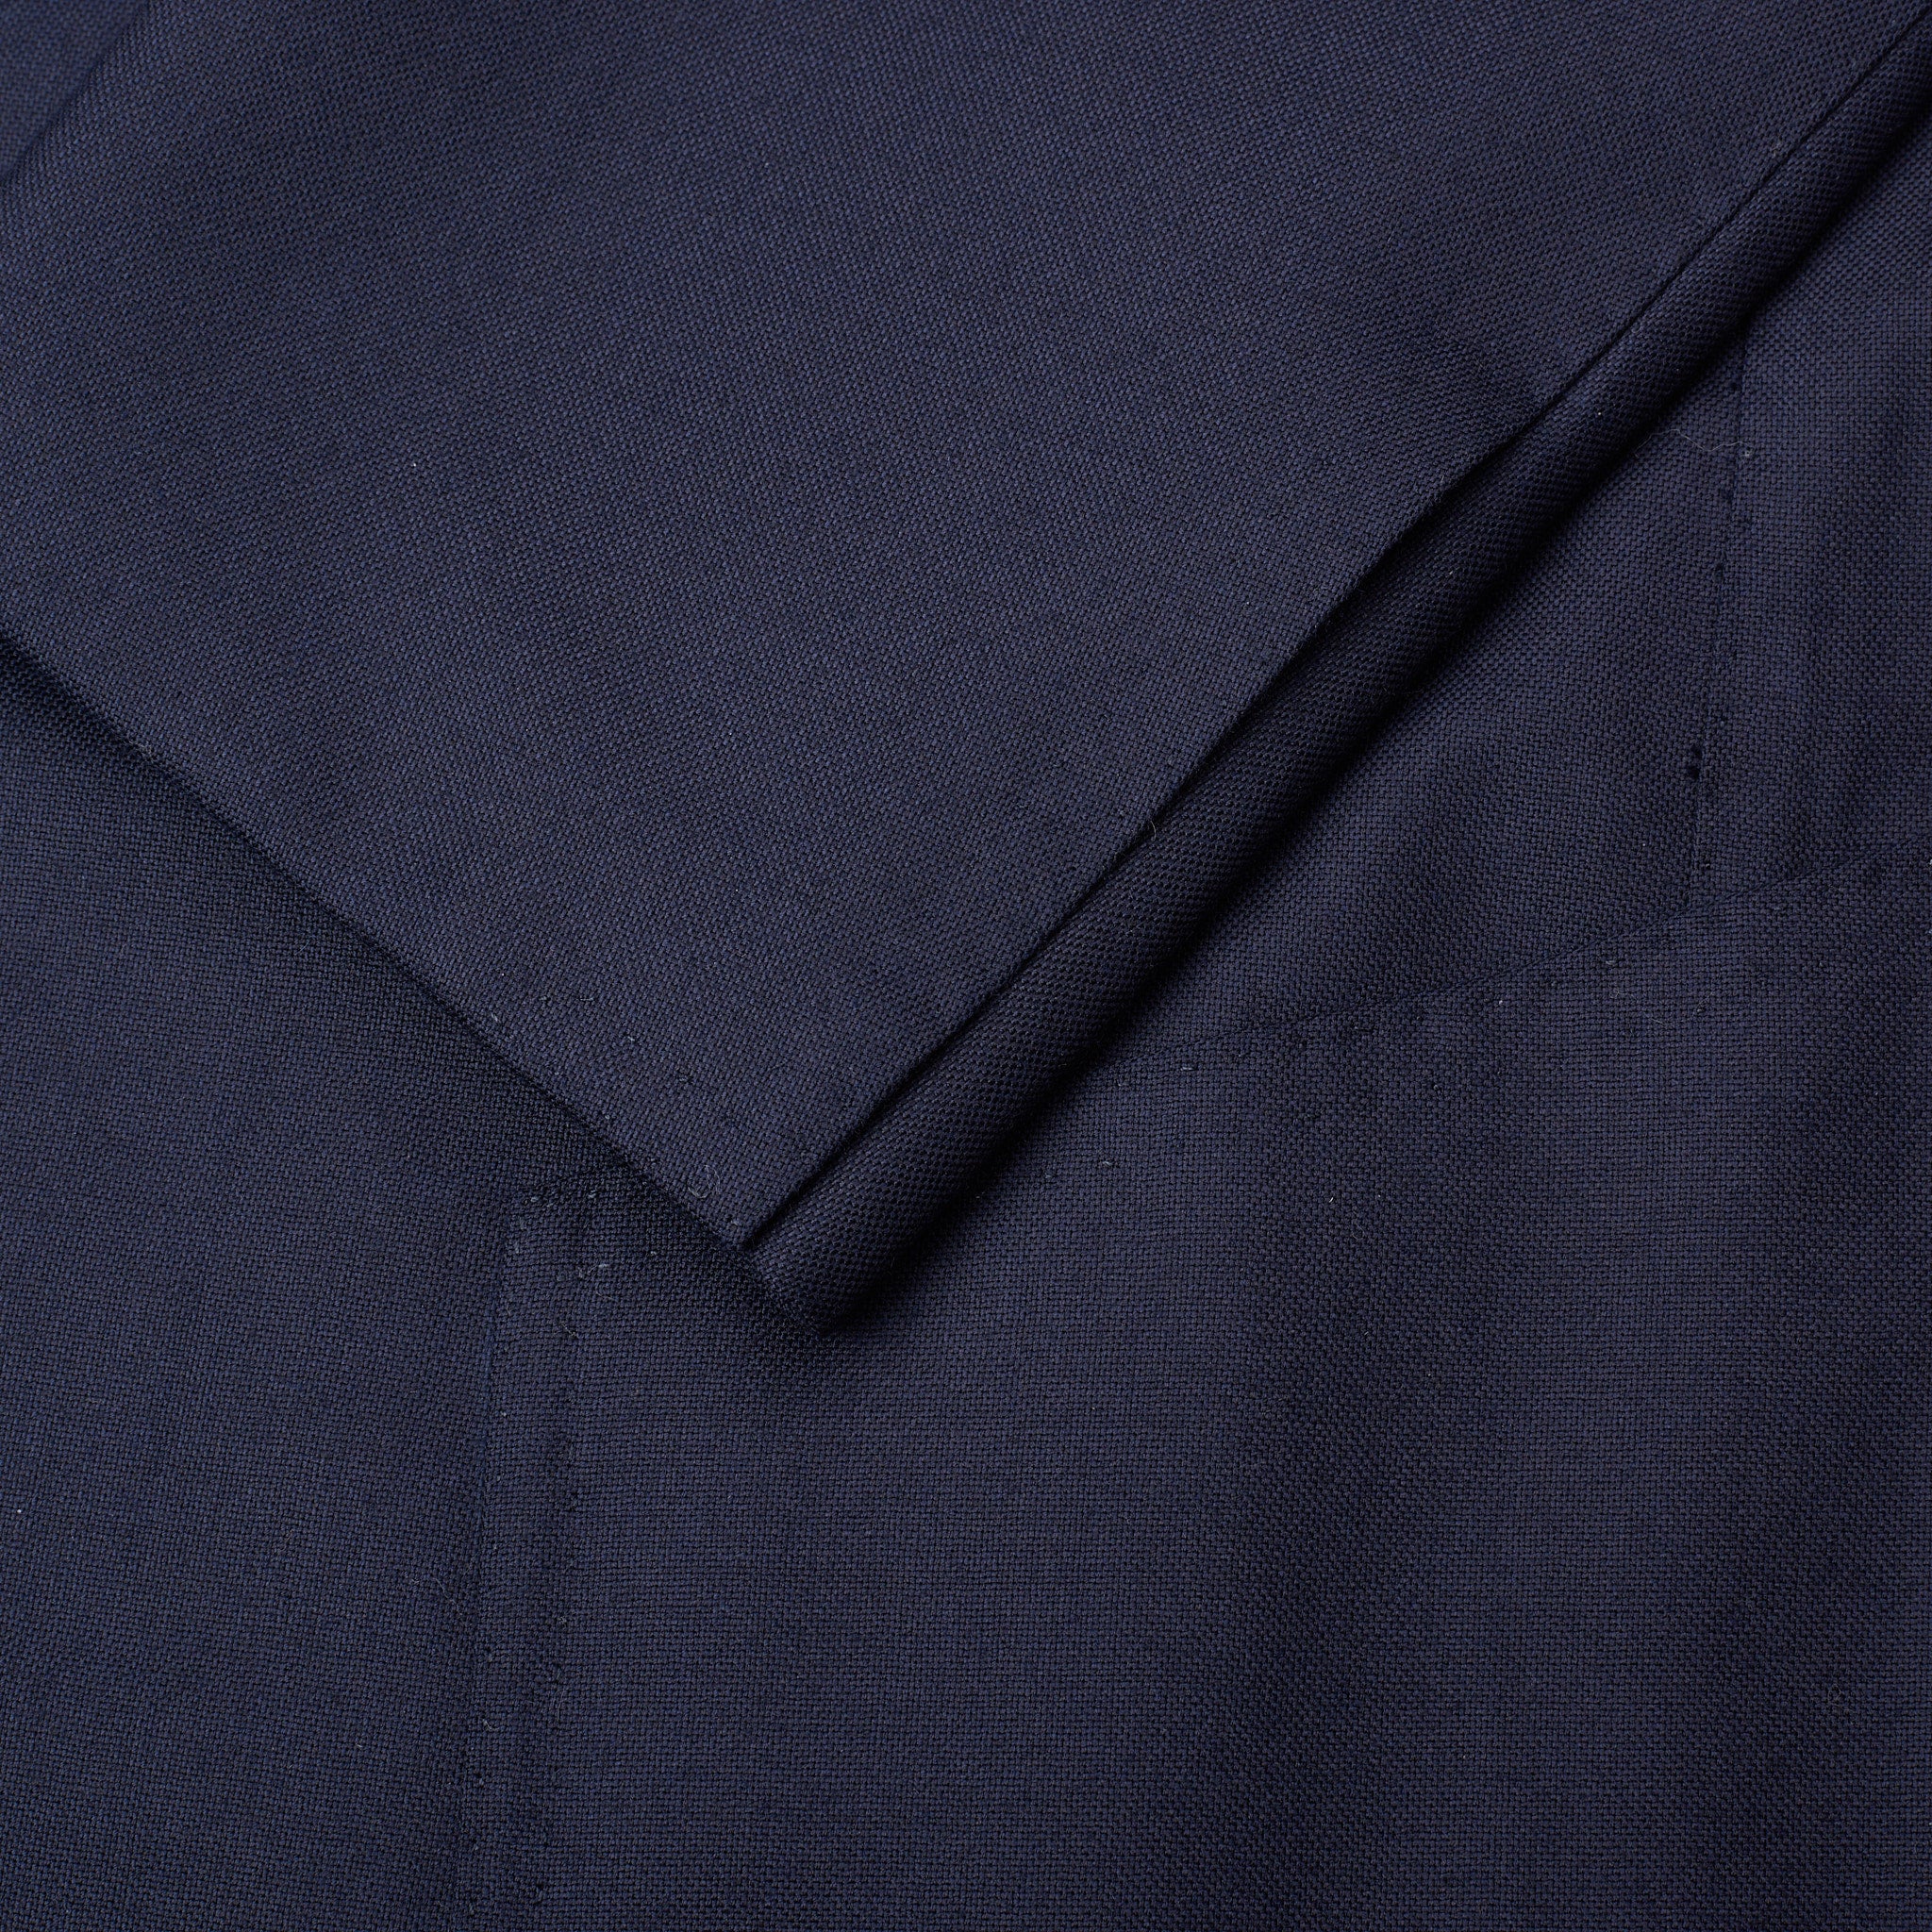 Sartoria CHIAIA Bespoke Handmade Navy Blue Wool Jacket EU 50 NEW US 40 SARTORIA CHIAIA